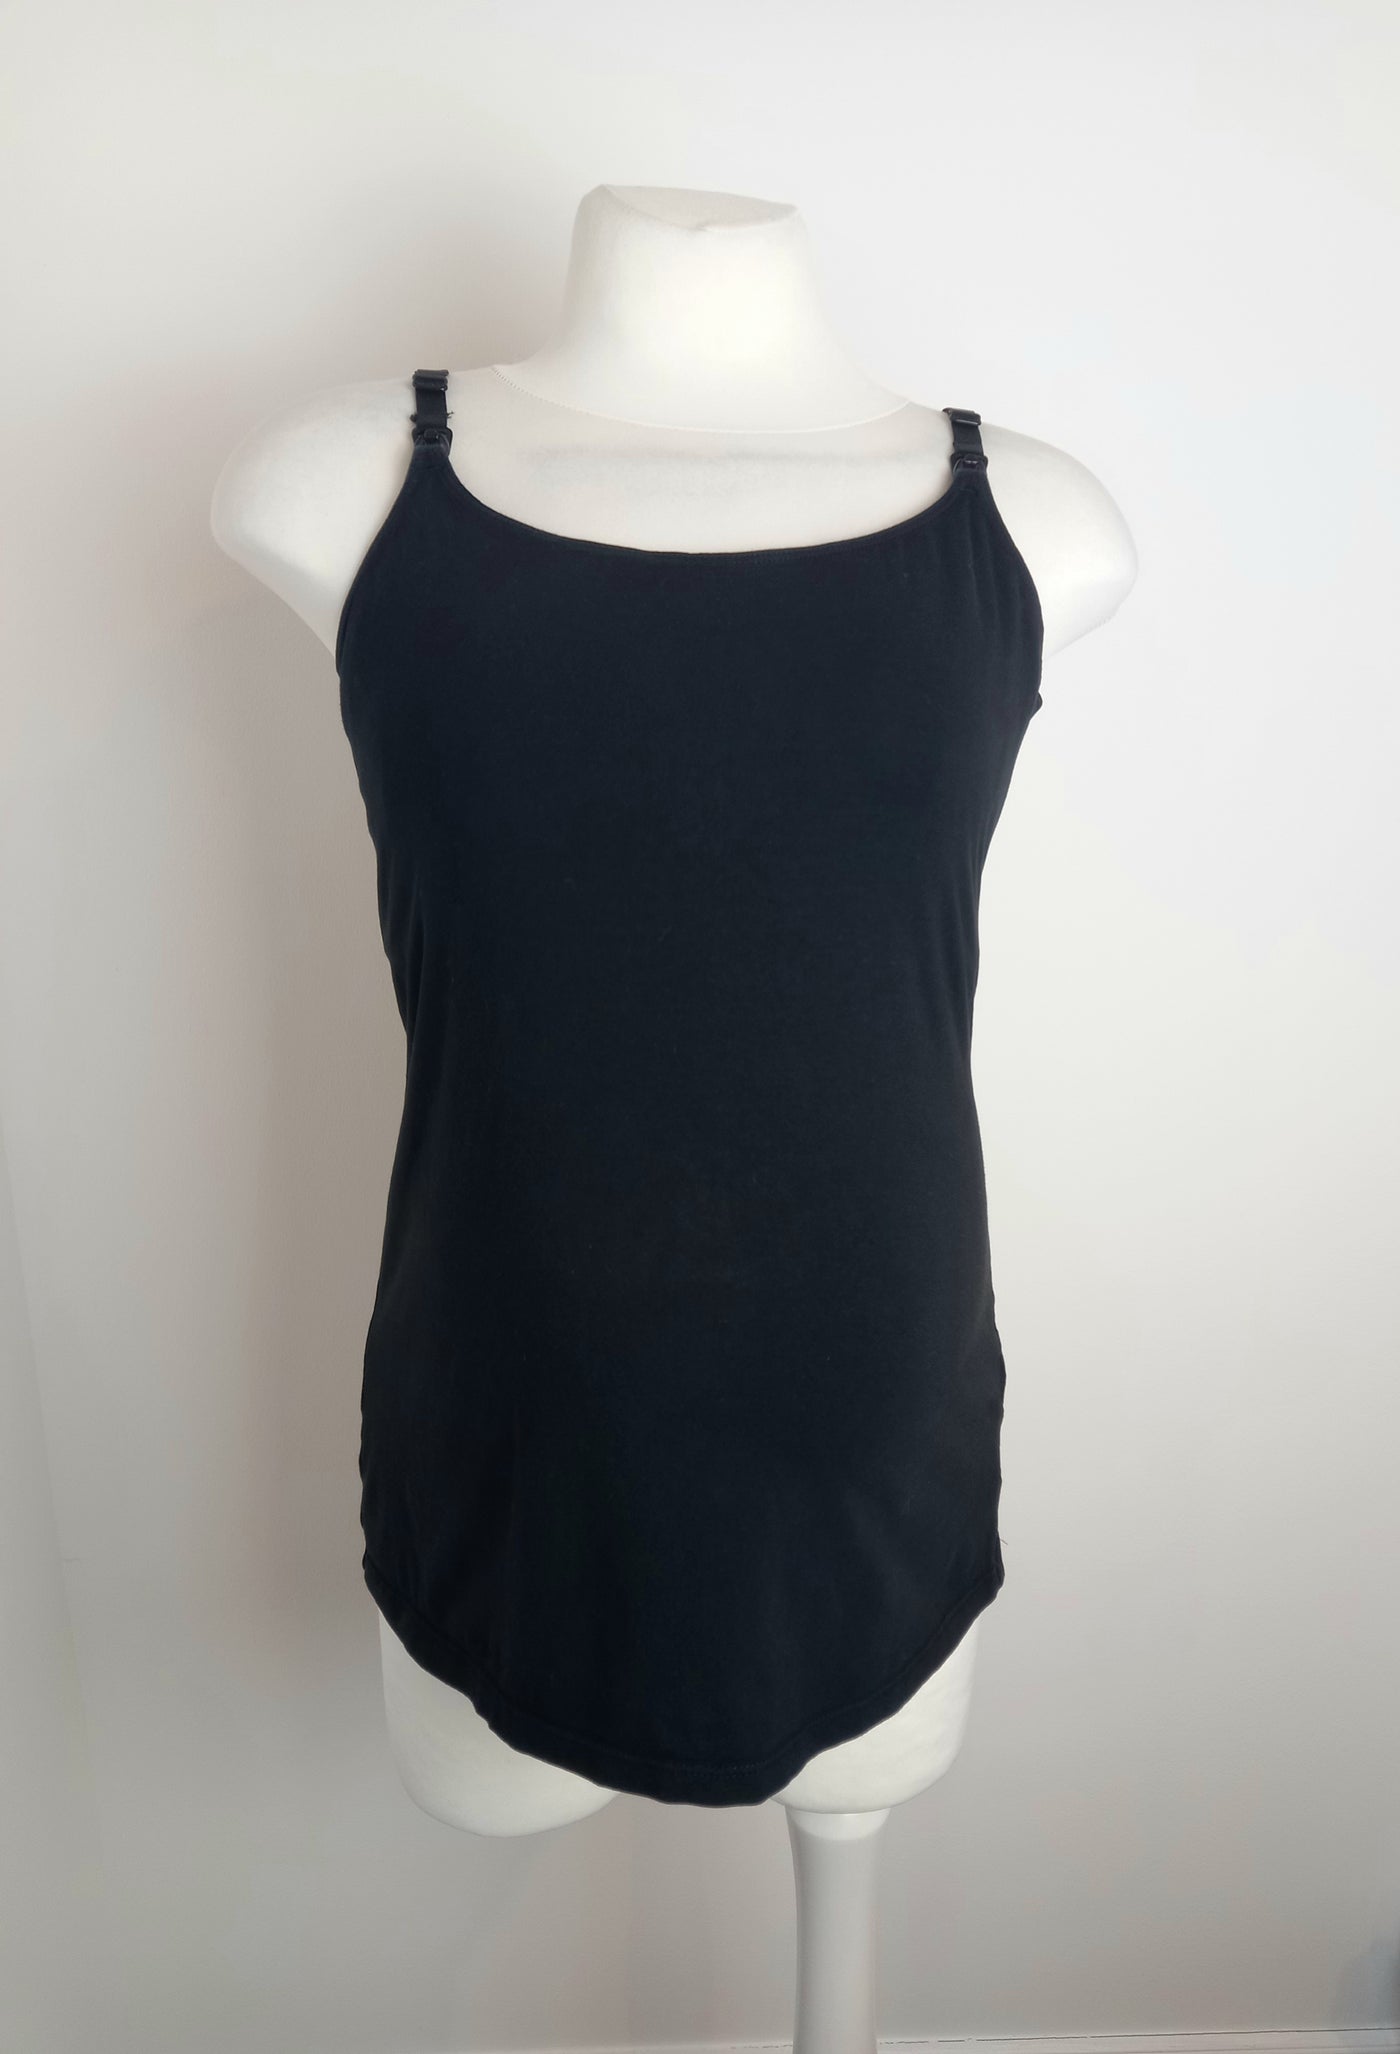 H&M Mama black camisole nursing top - Size L (Approx UK 12/14)